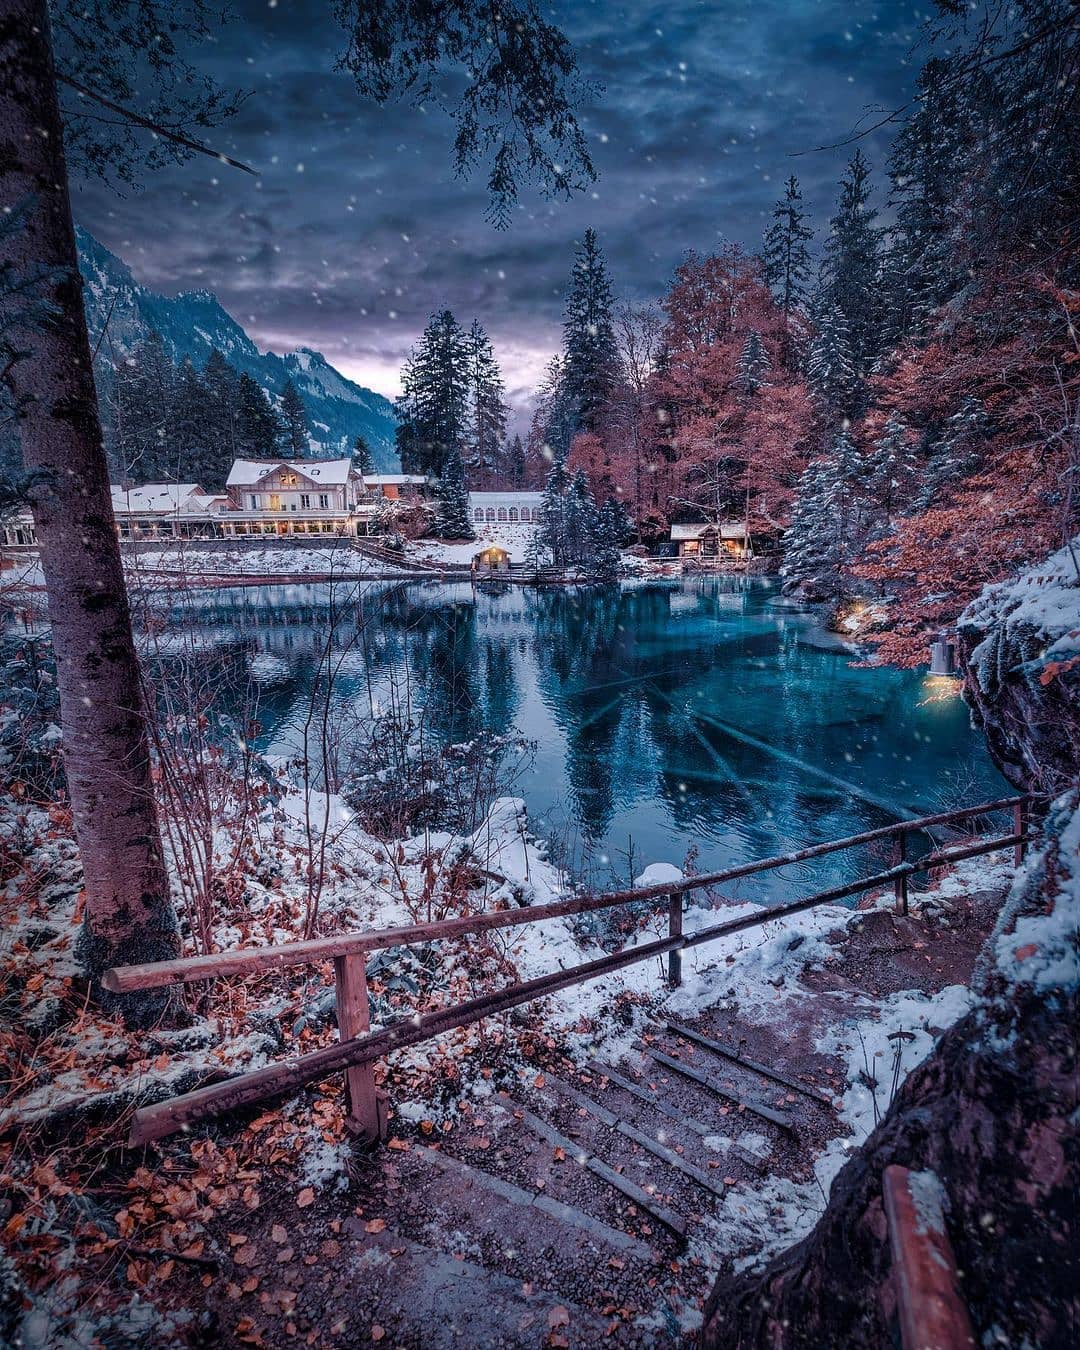 Blausee, Switzerland (Photo credit to @momentsofgregory)